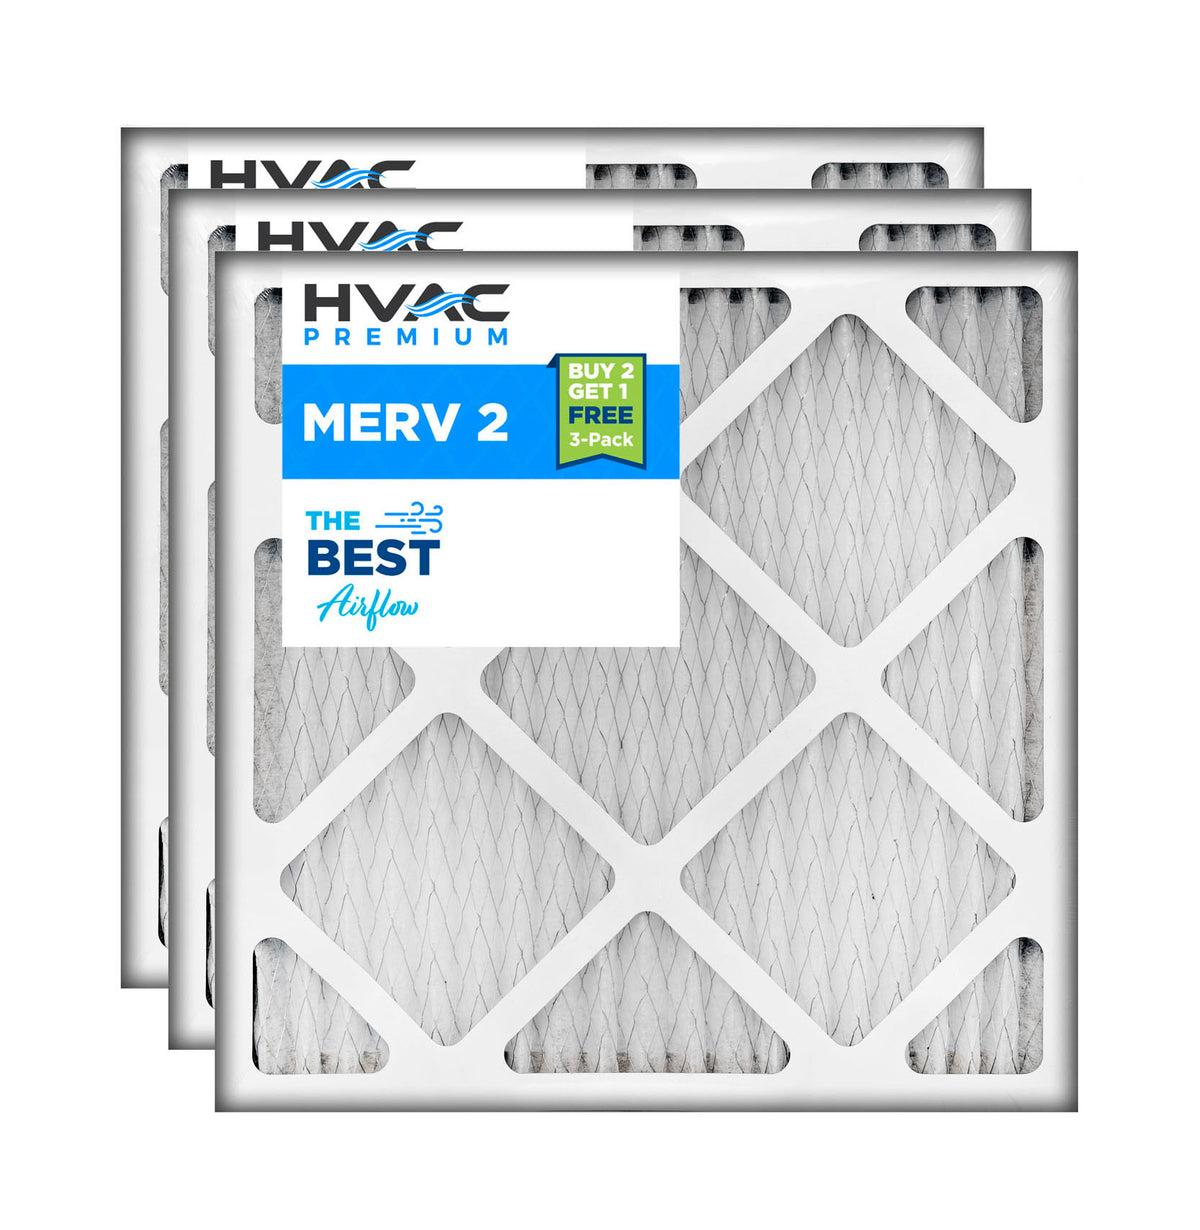 8 x 16 Merv 2 HVAC Pleated Filter, 3-Pack